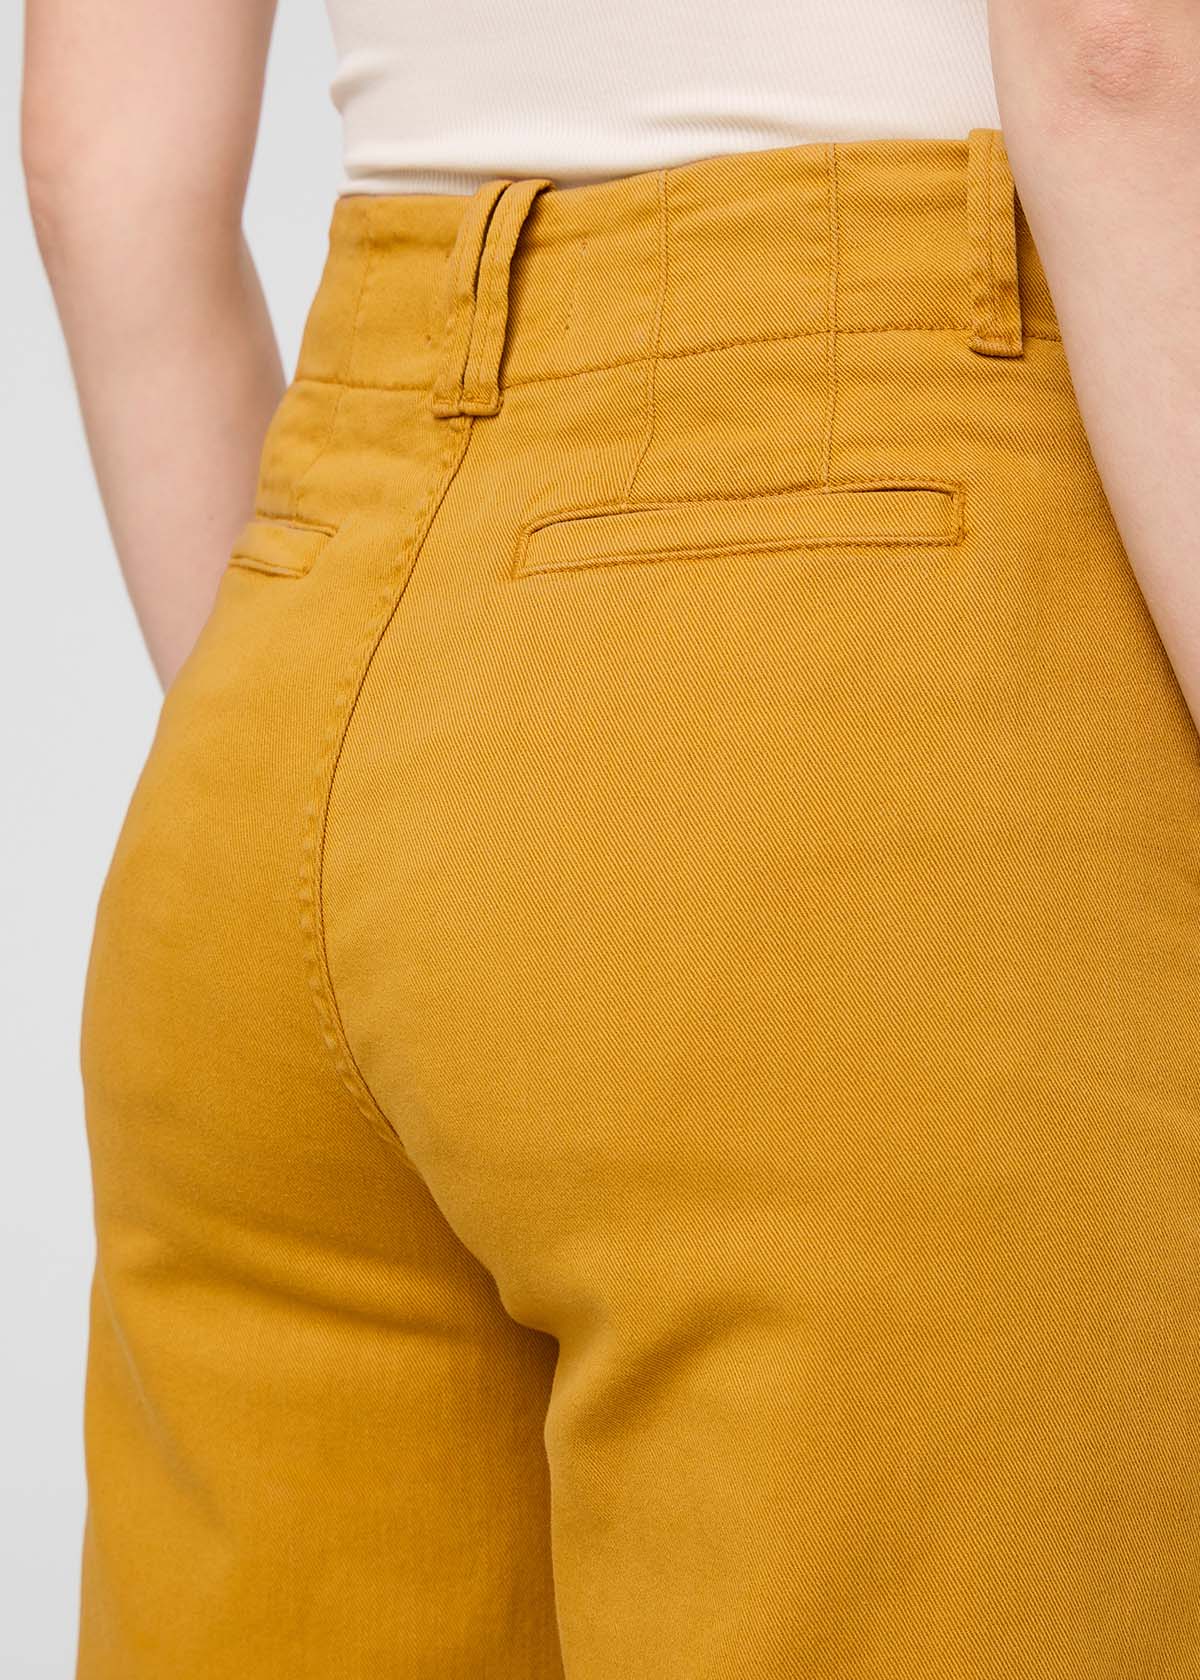 womens yellow high rise trouser back waistband detail